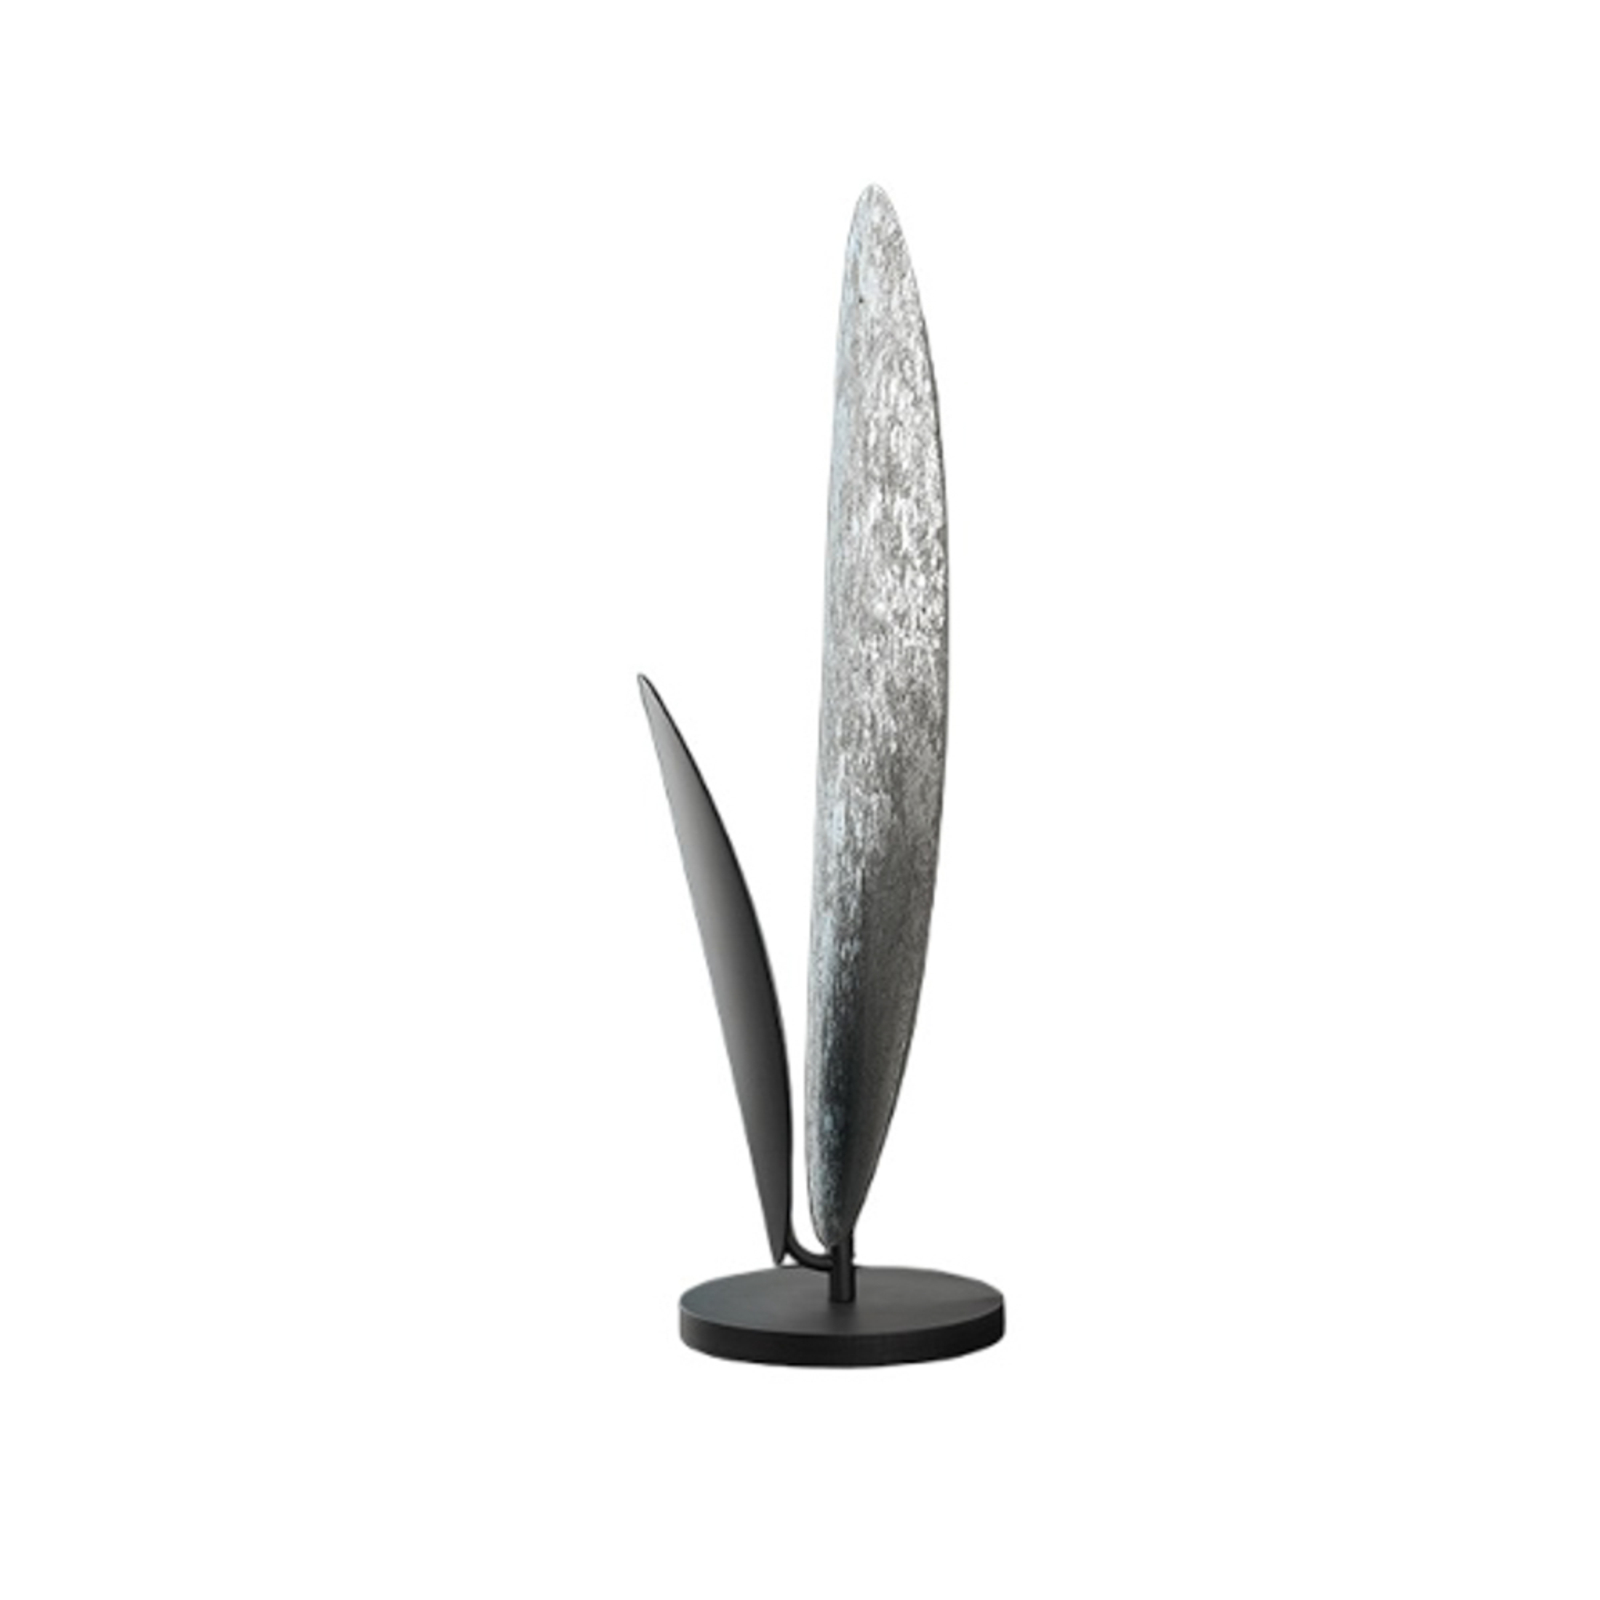 ICONE Masai bordlampe 927, højde 74 cm, sølv/jern